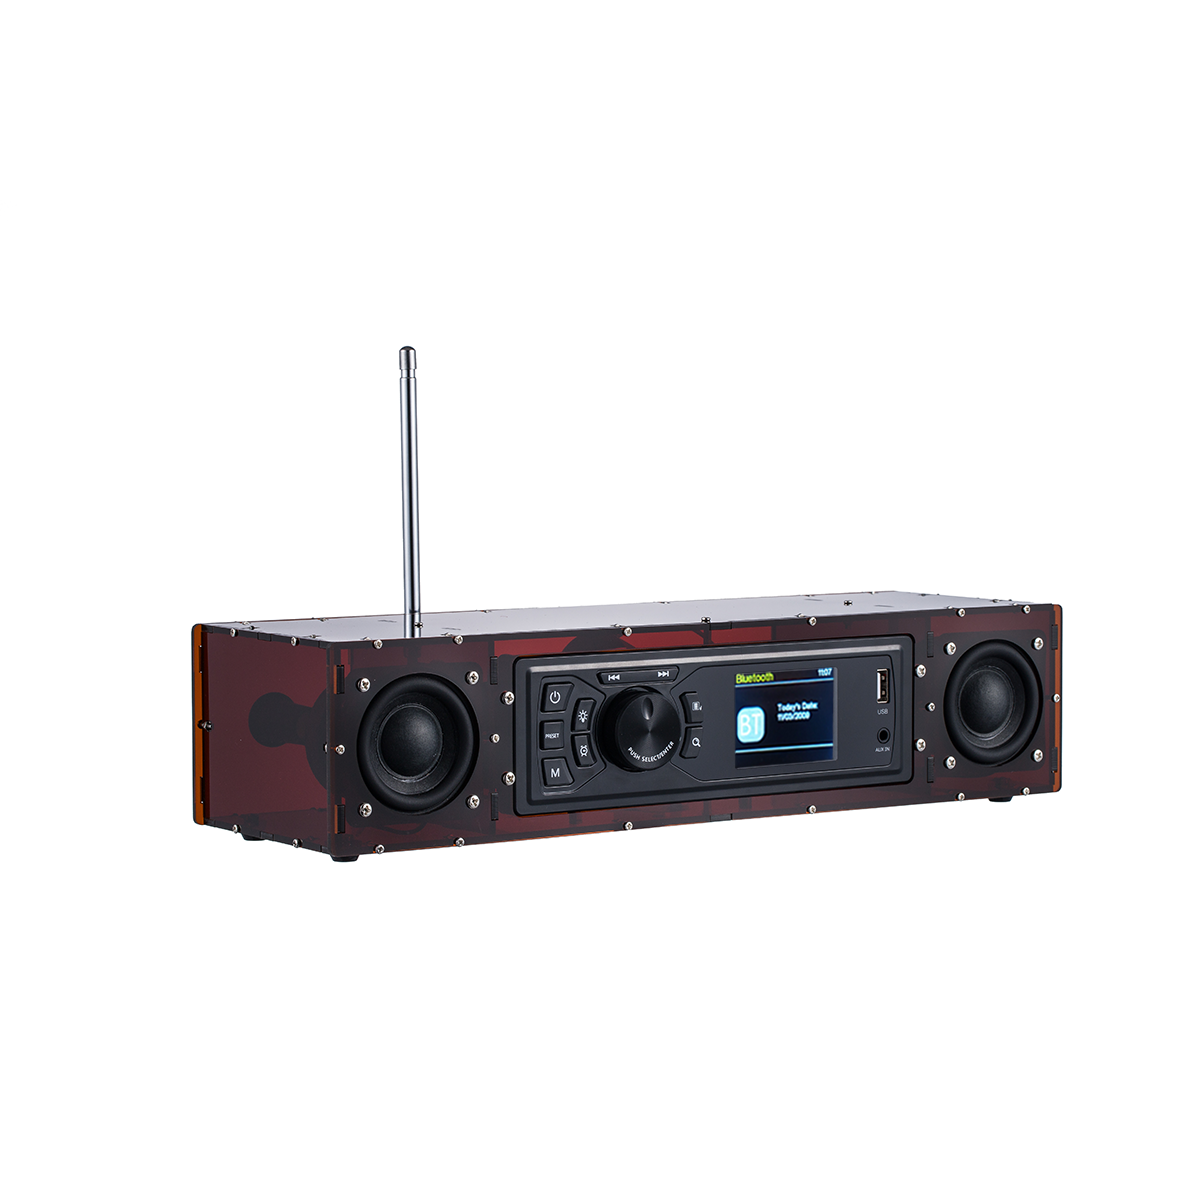 AOVOTO ALK103 FM/DAB radio Do It Yourself (DIY) kits with acrylic shell, DIY DAB+/FM Sets with alarm mode & LCD Display & stero sound box (brown)